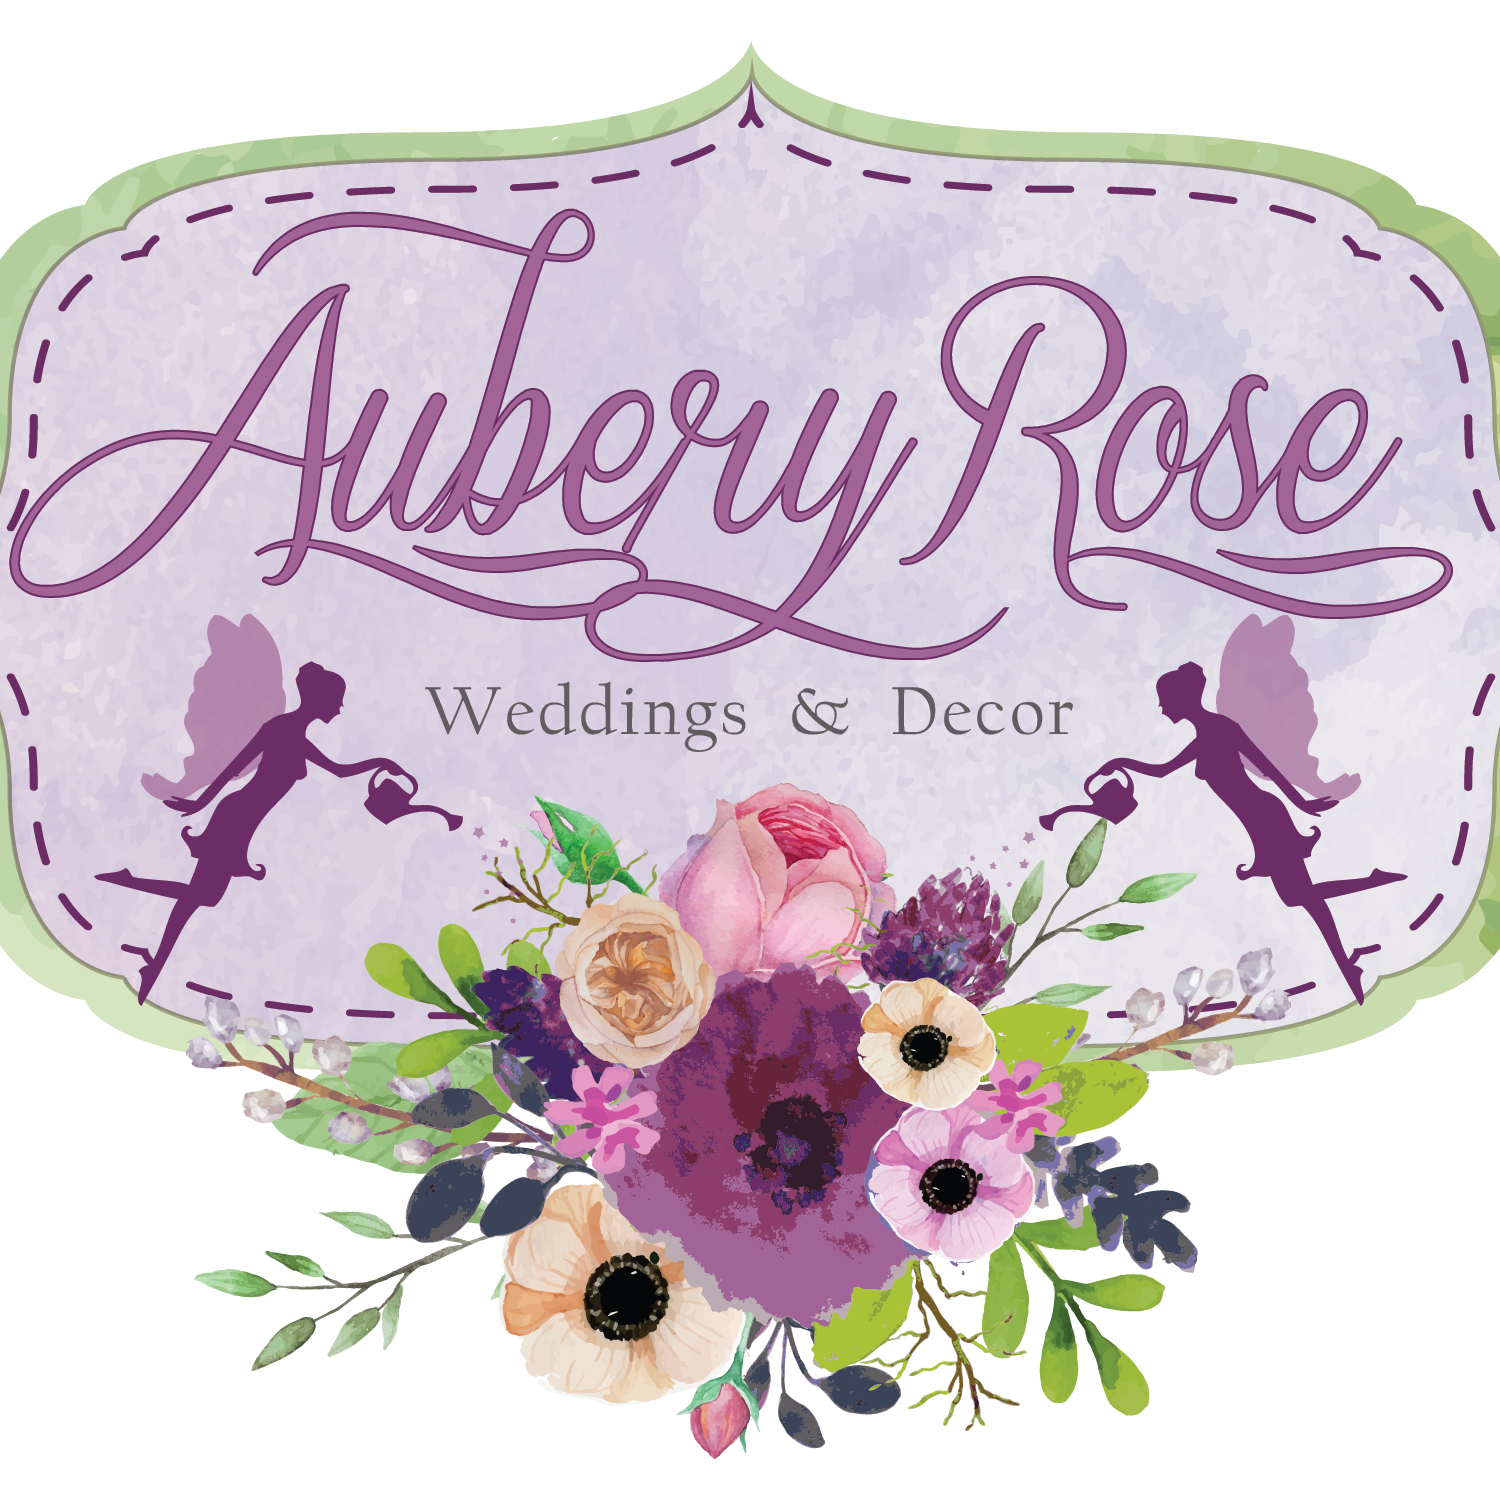 Aubery Rose Wedding The Woodlands (936)777-4130